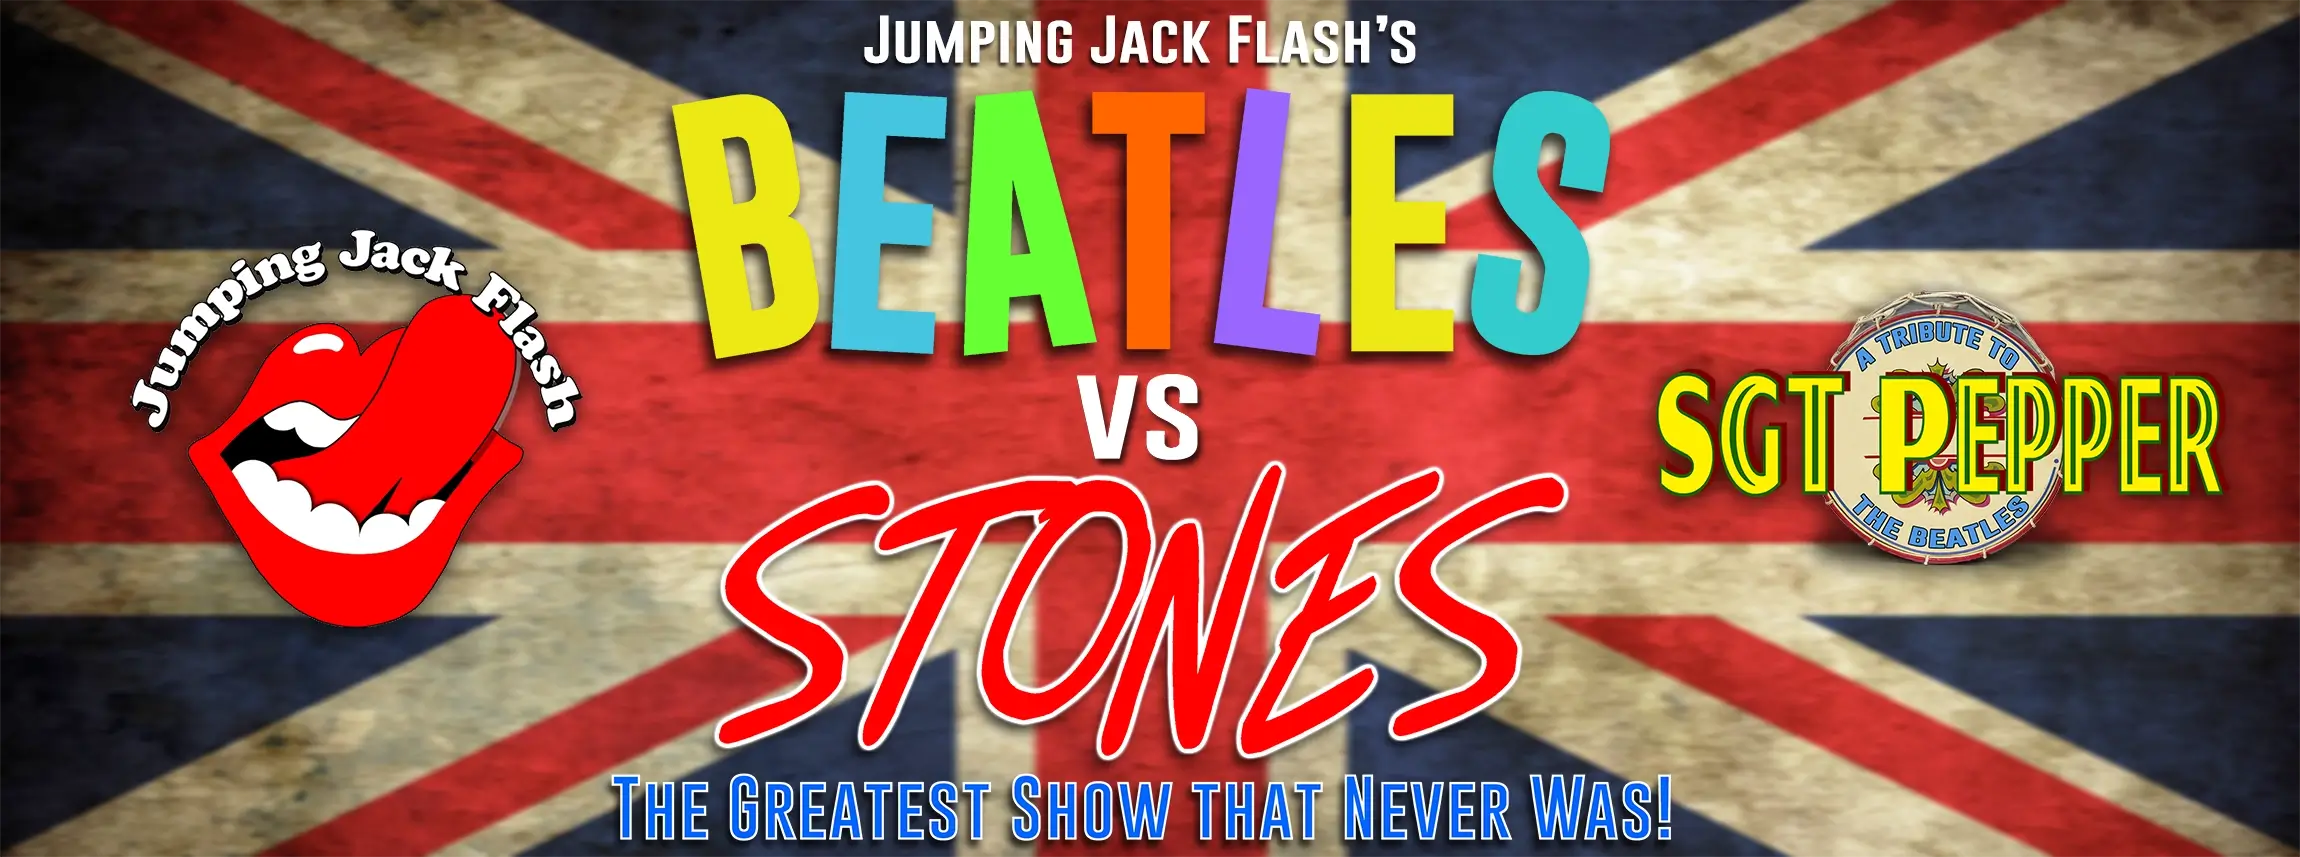 Beatles vs. Stones banner